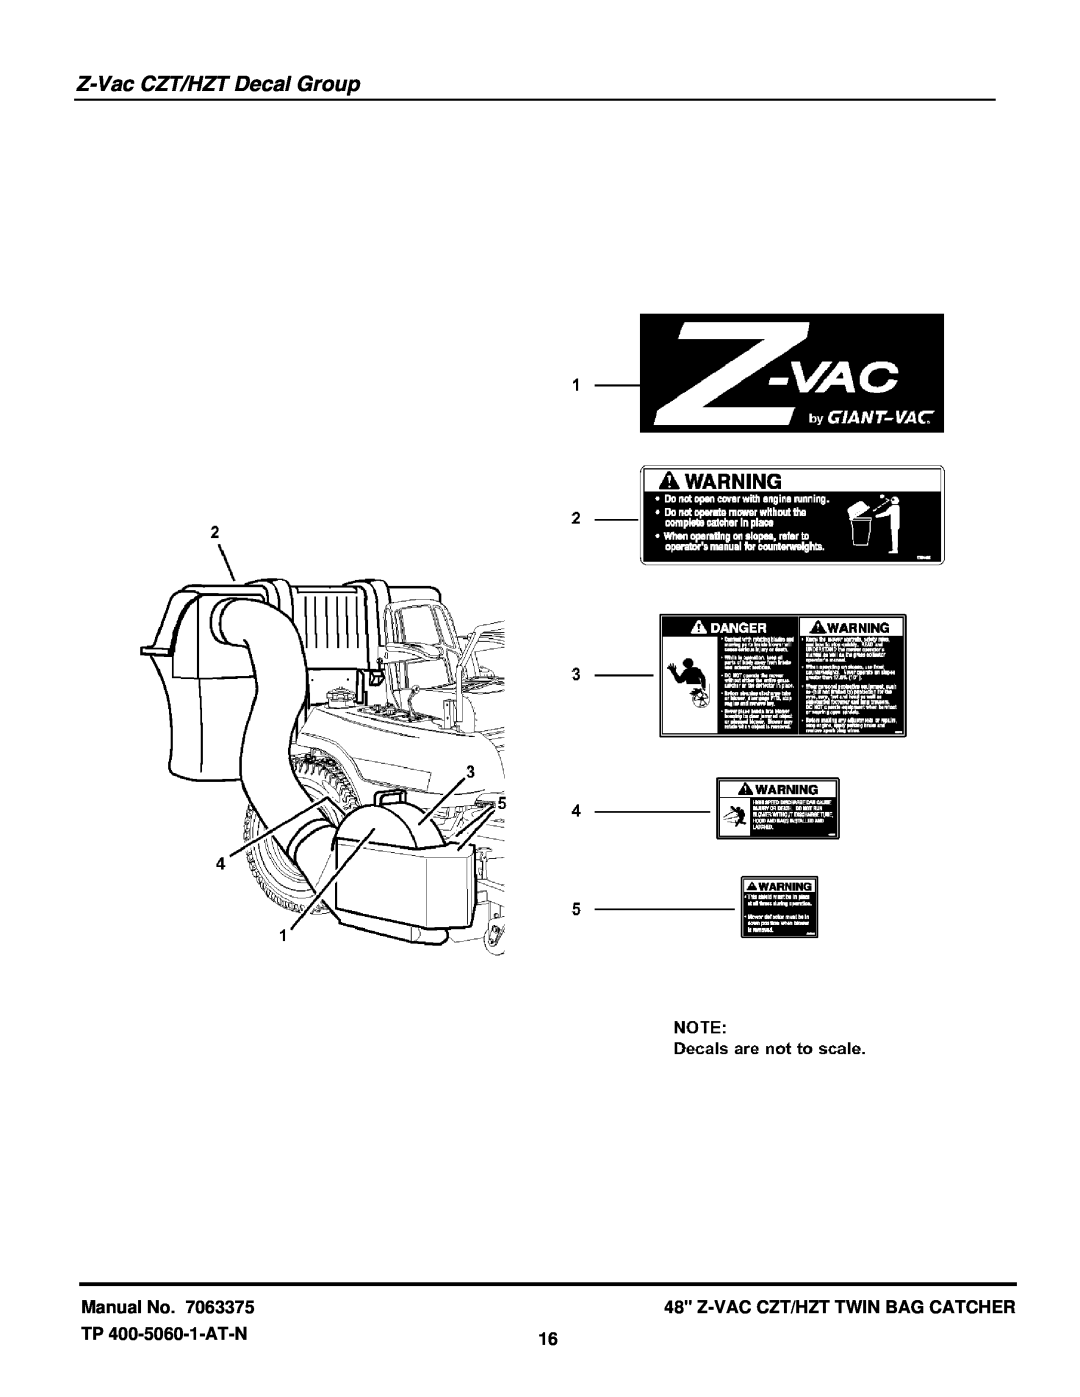 Snapper 7063375 manual Z-Vac CZT/HZT Decal Group, Manual No, Z-Vac Czt/Hzt Twin Bag Catcher, TP 400-5060-1-AT-N 